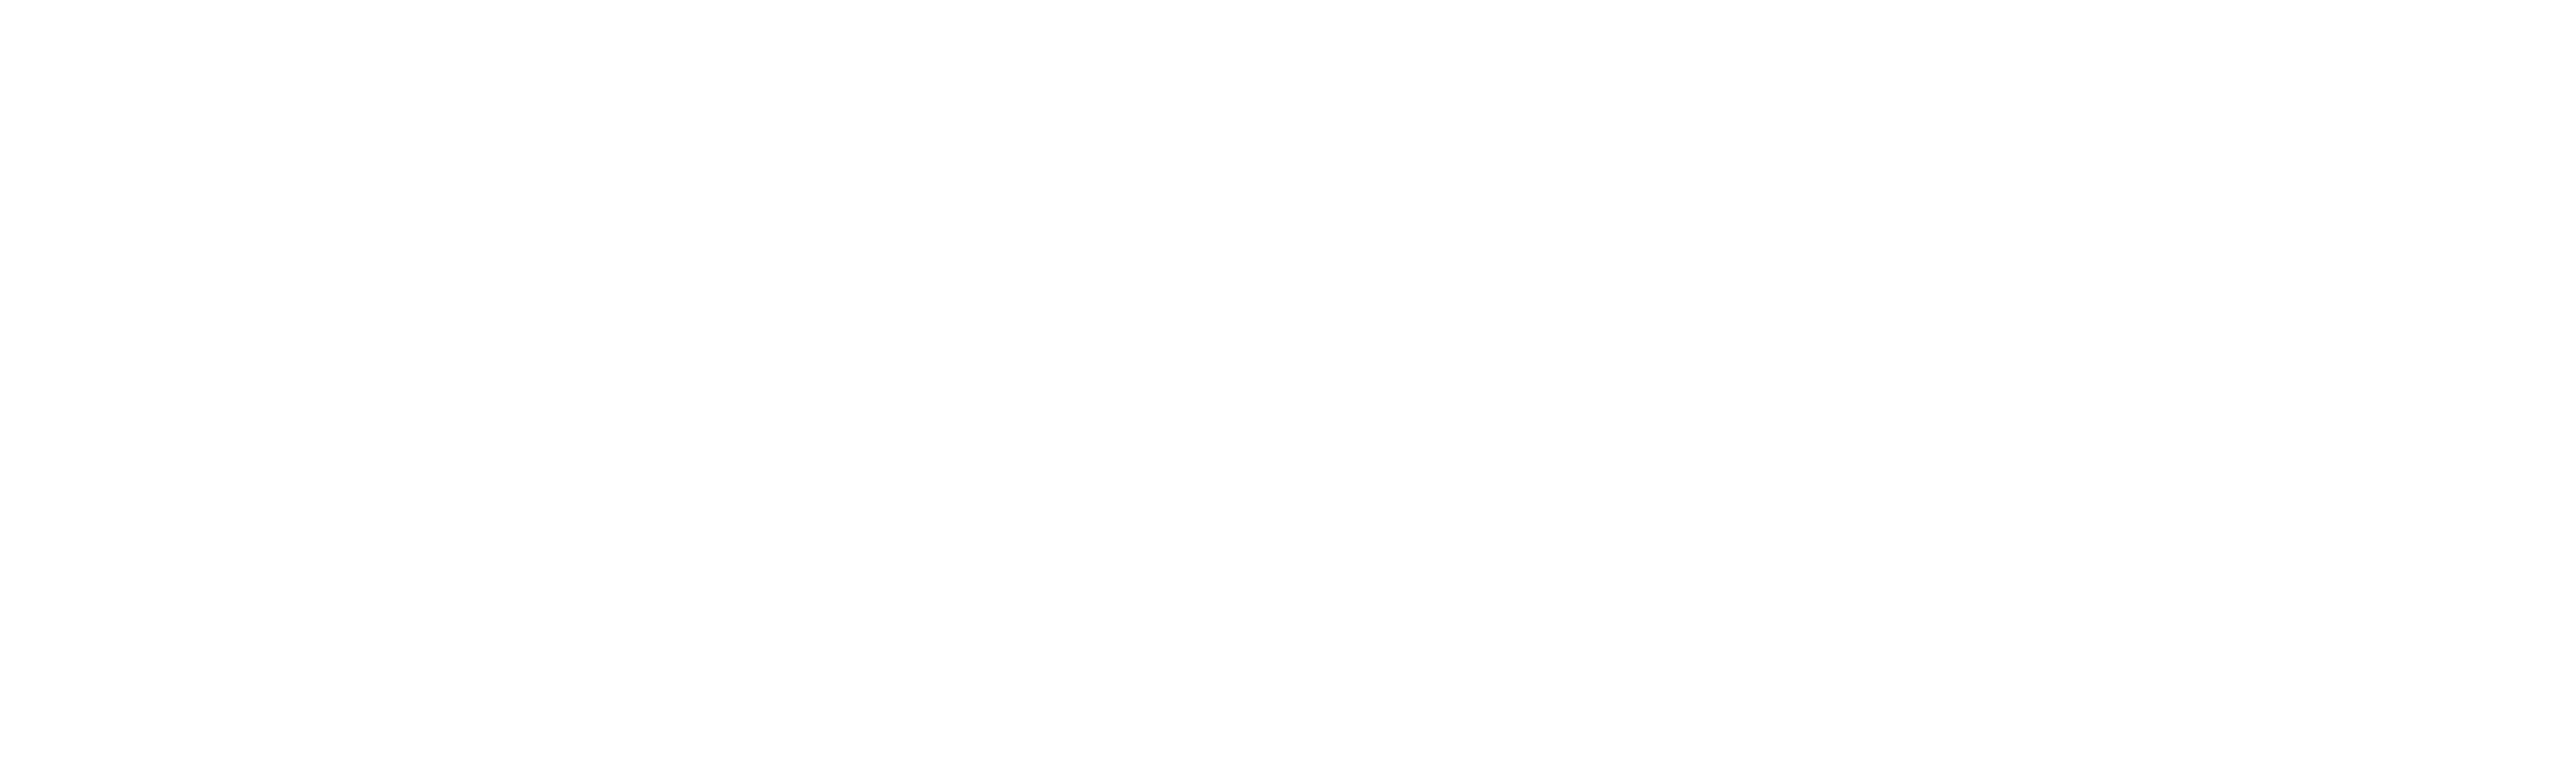 Sinister King